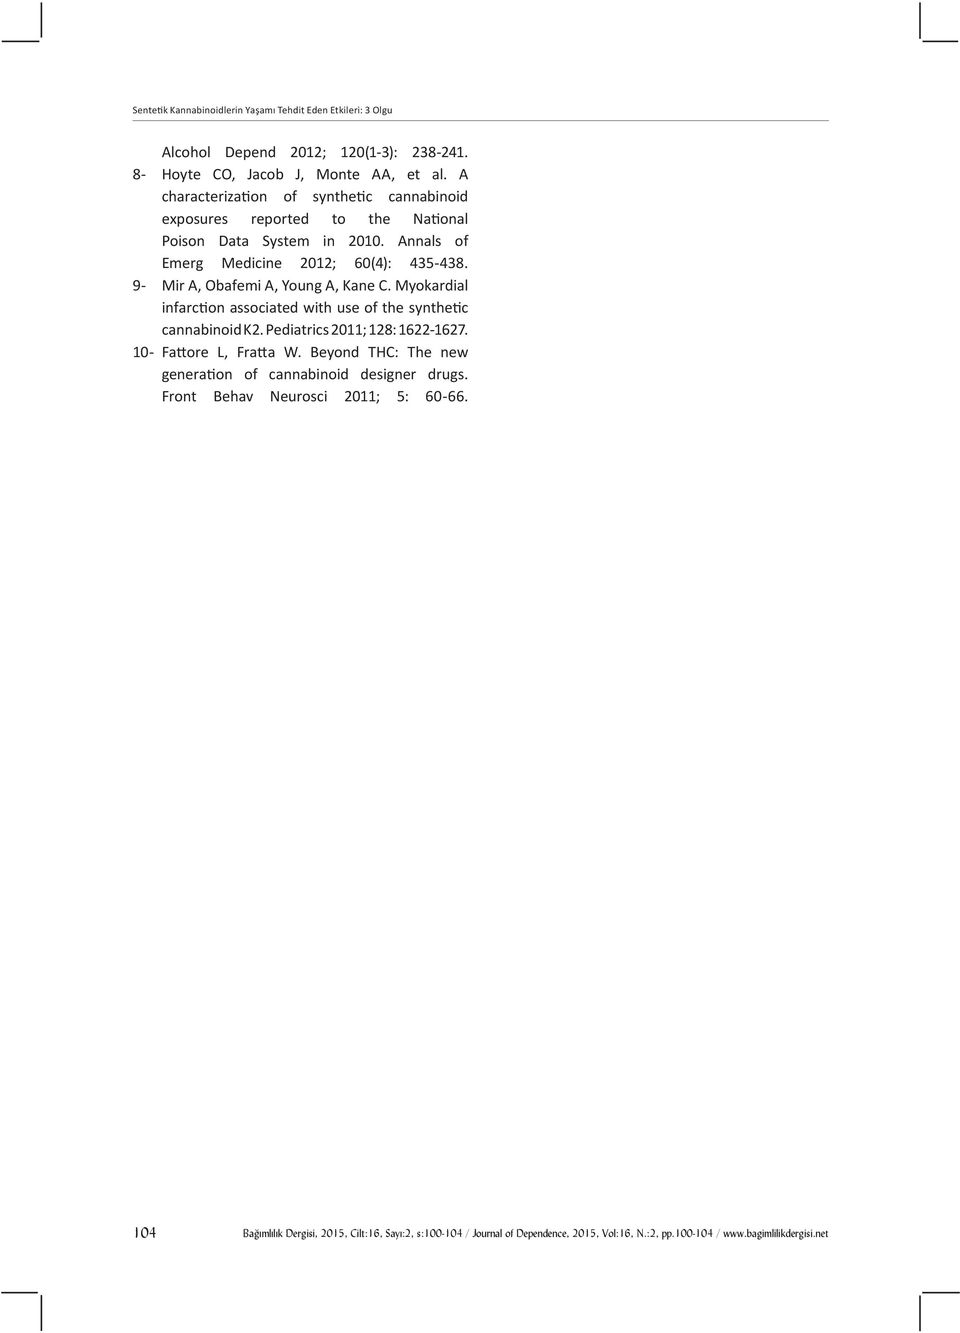 Annals of Emerg Medicine 2012; 60(4): 435-438. 9- Mir A, Obafemi A, Young A, Kane C.